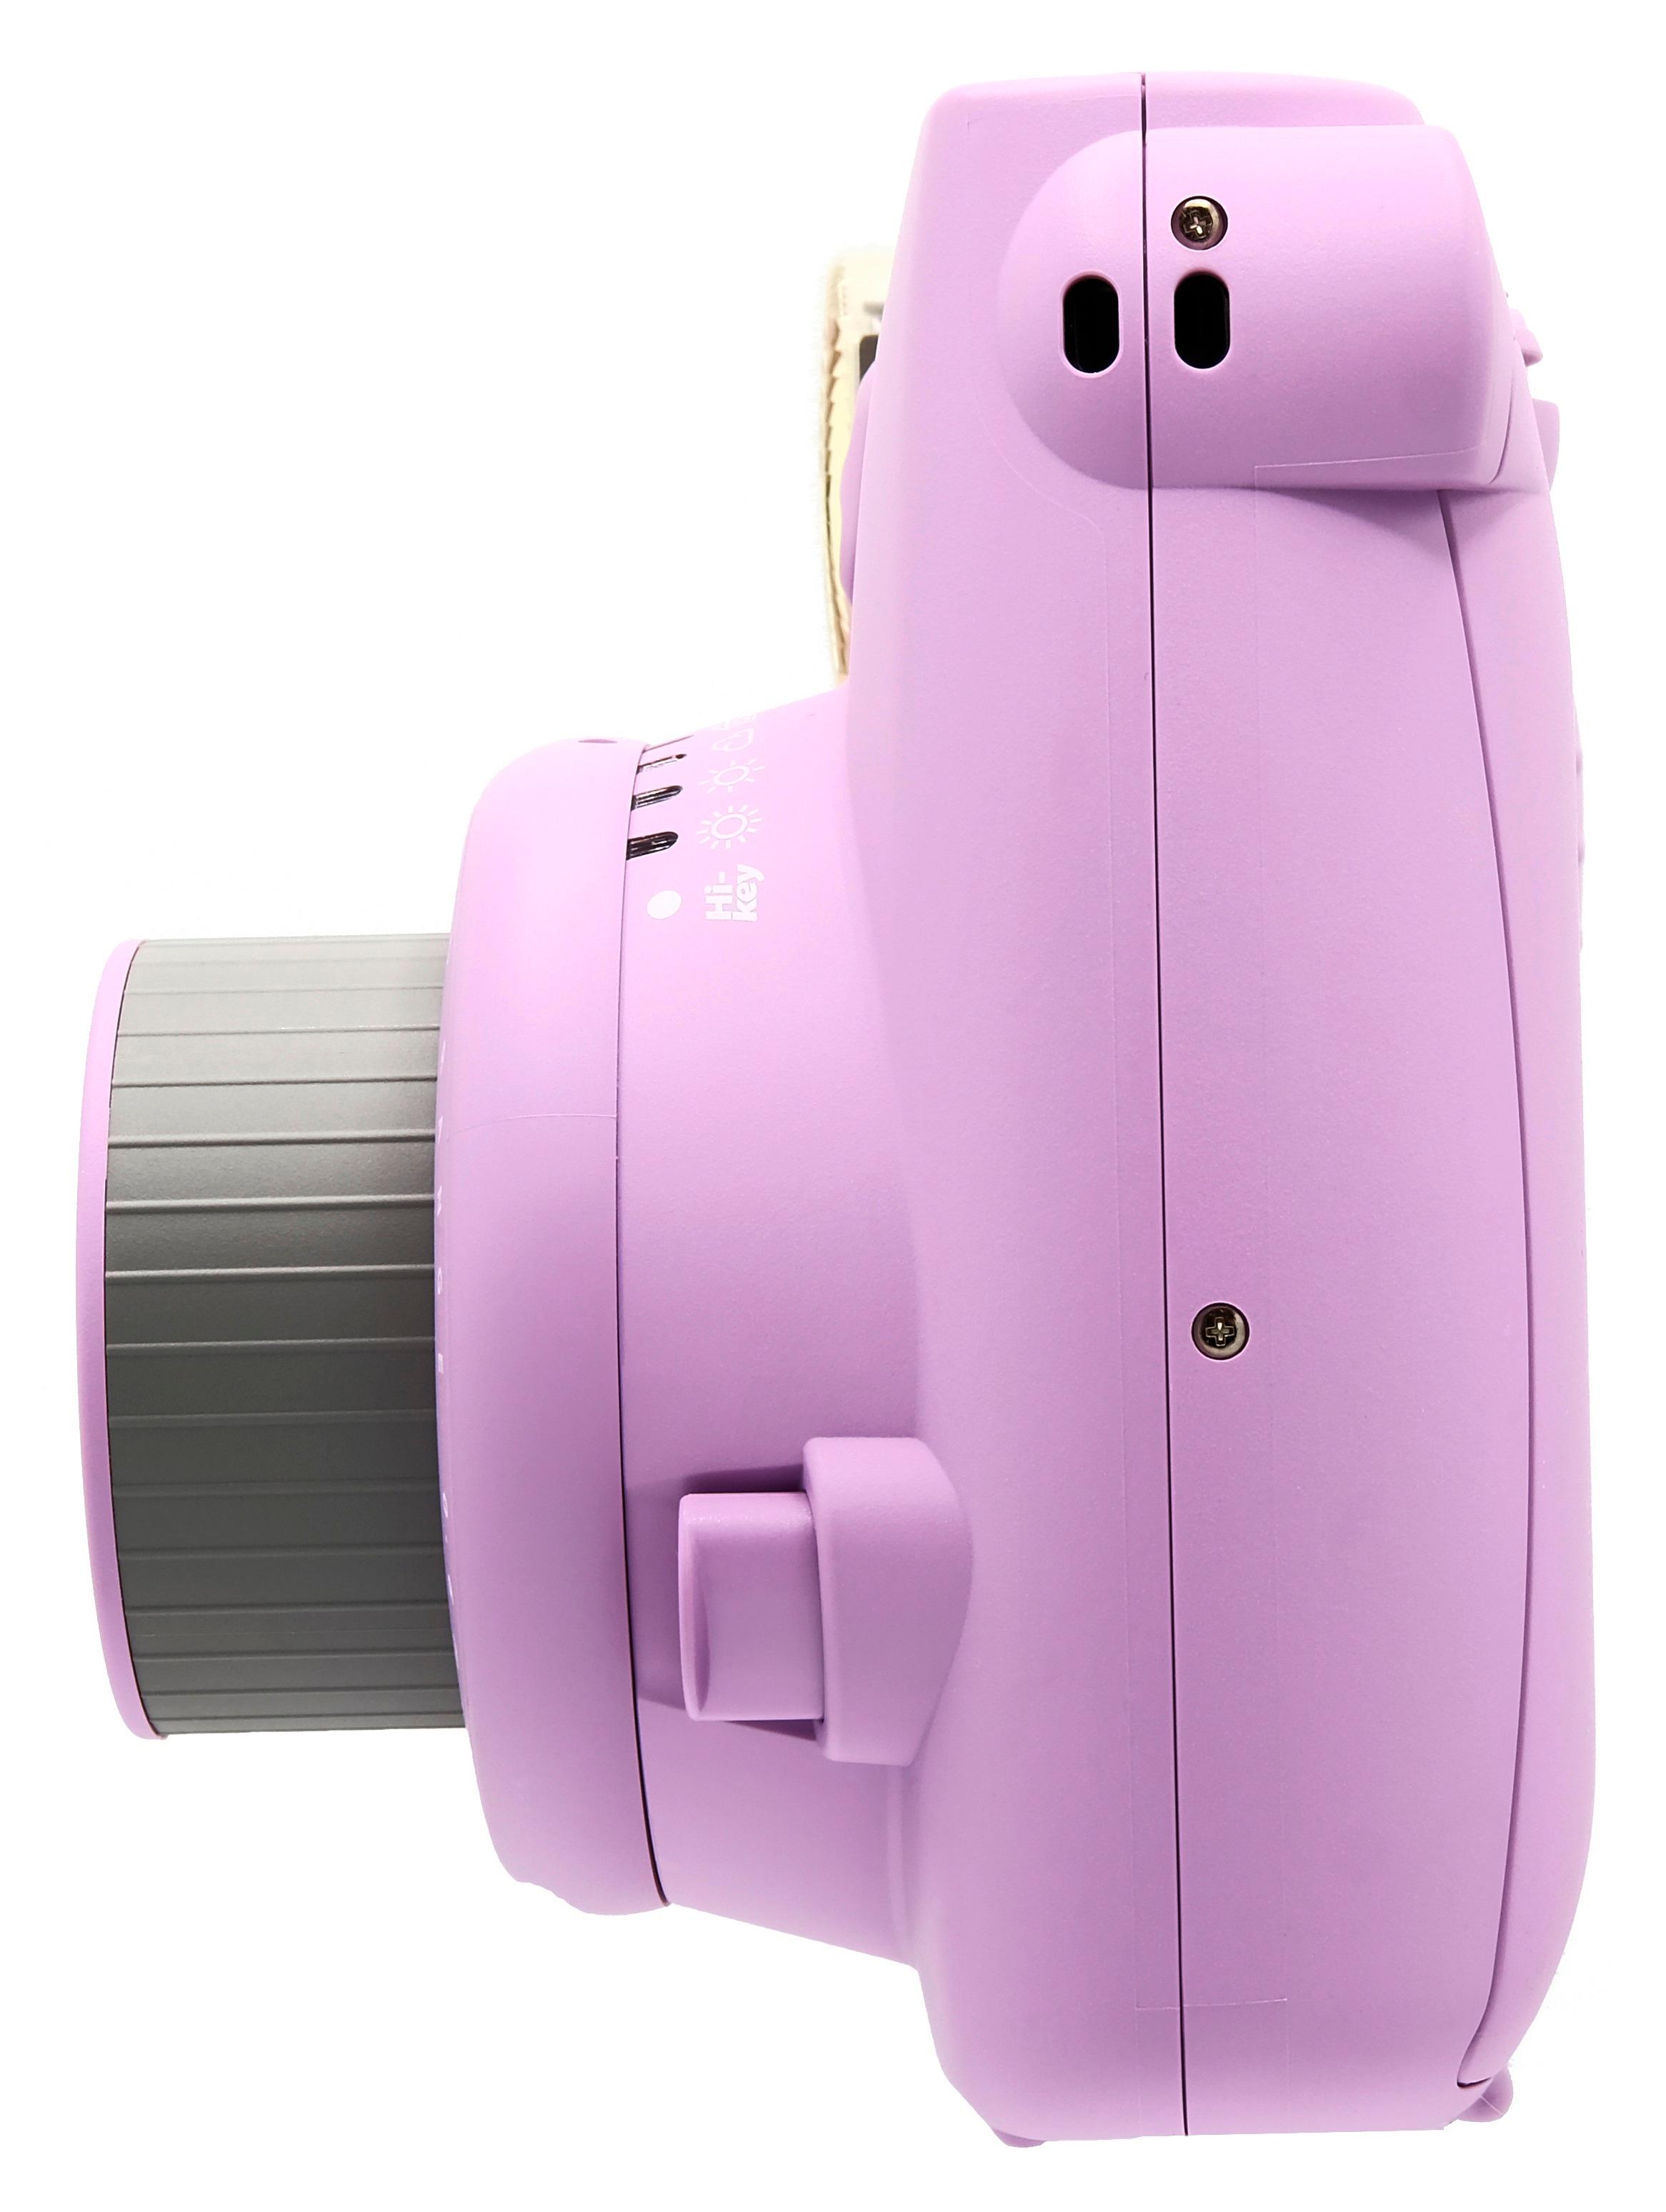 Fujifilm instax mini 9 Instant Film Camera Smokey Purple 16561991 - Best Buy